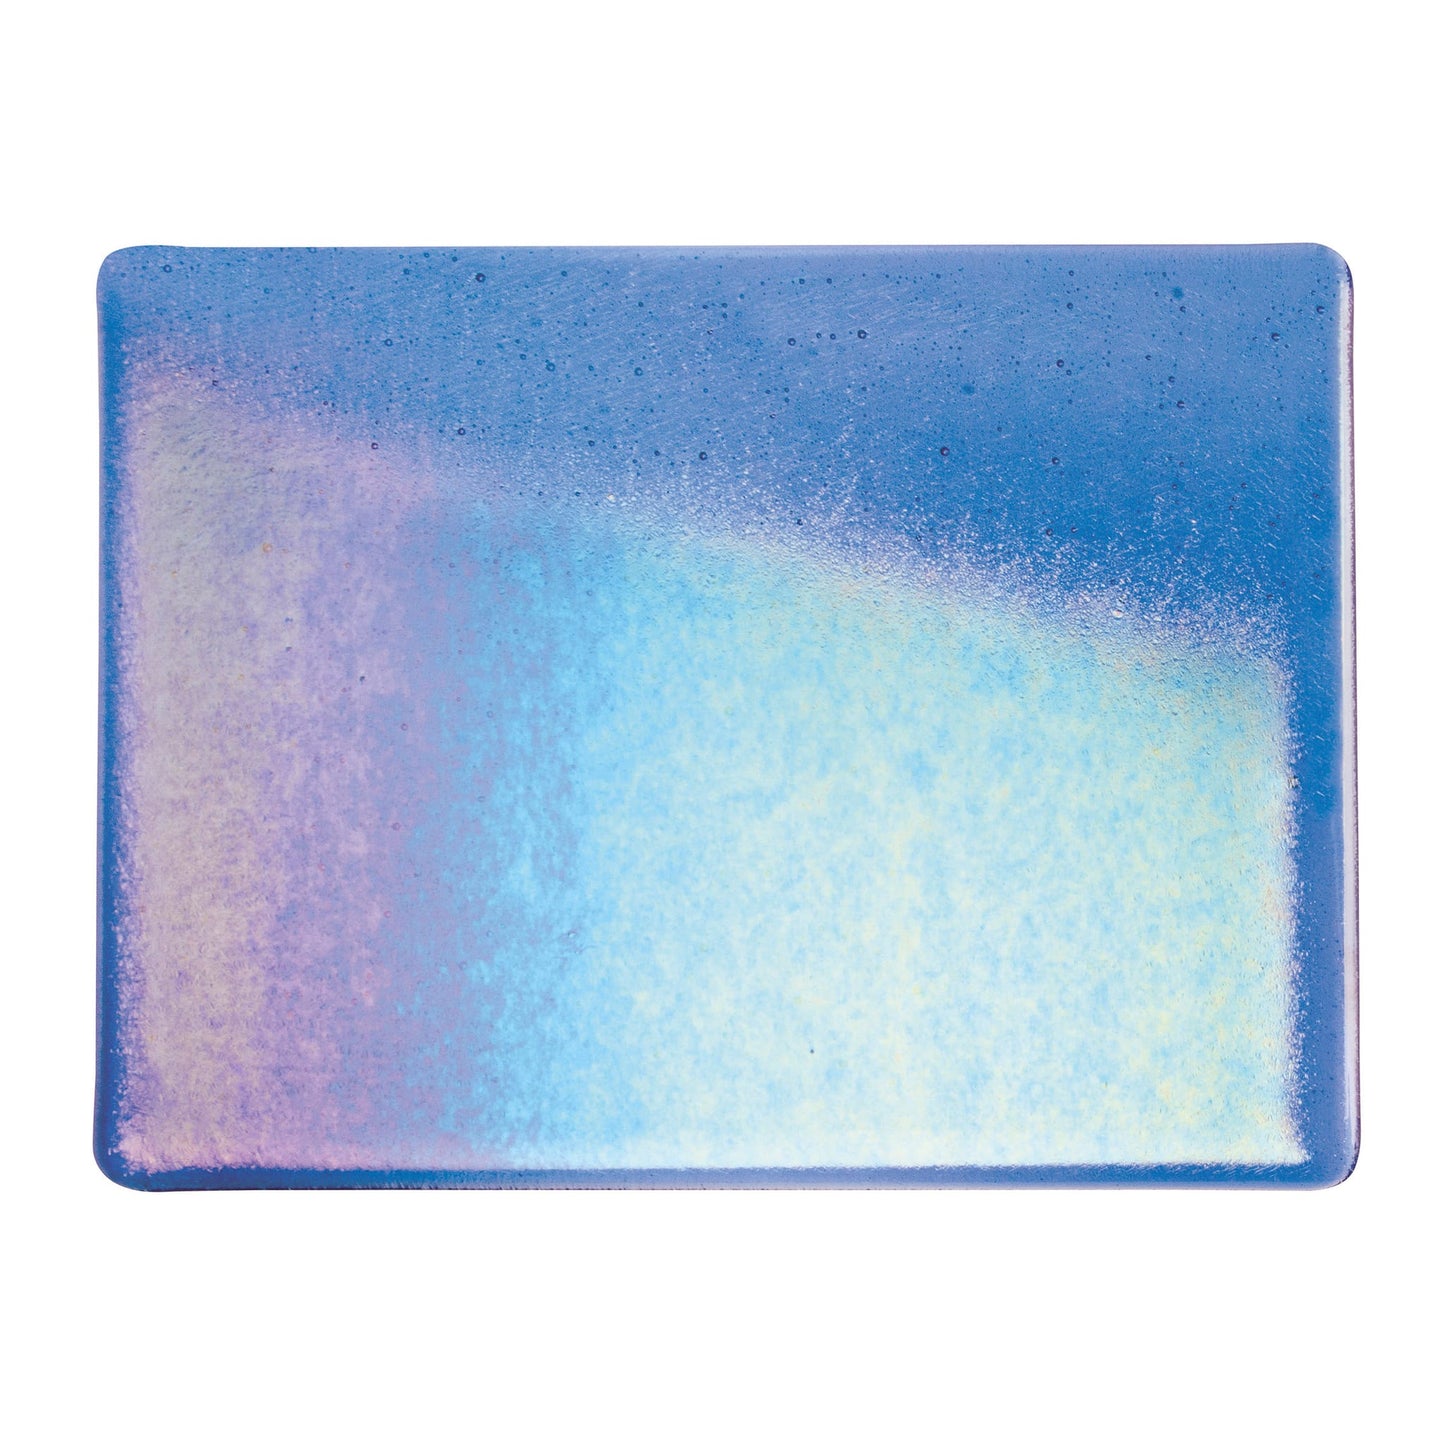 Bullseye COE90 Fusing Glass 001464 True Blue, Iridescent, Rainbow Full Sheet